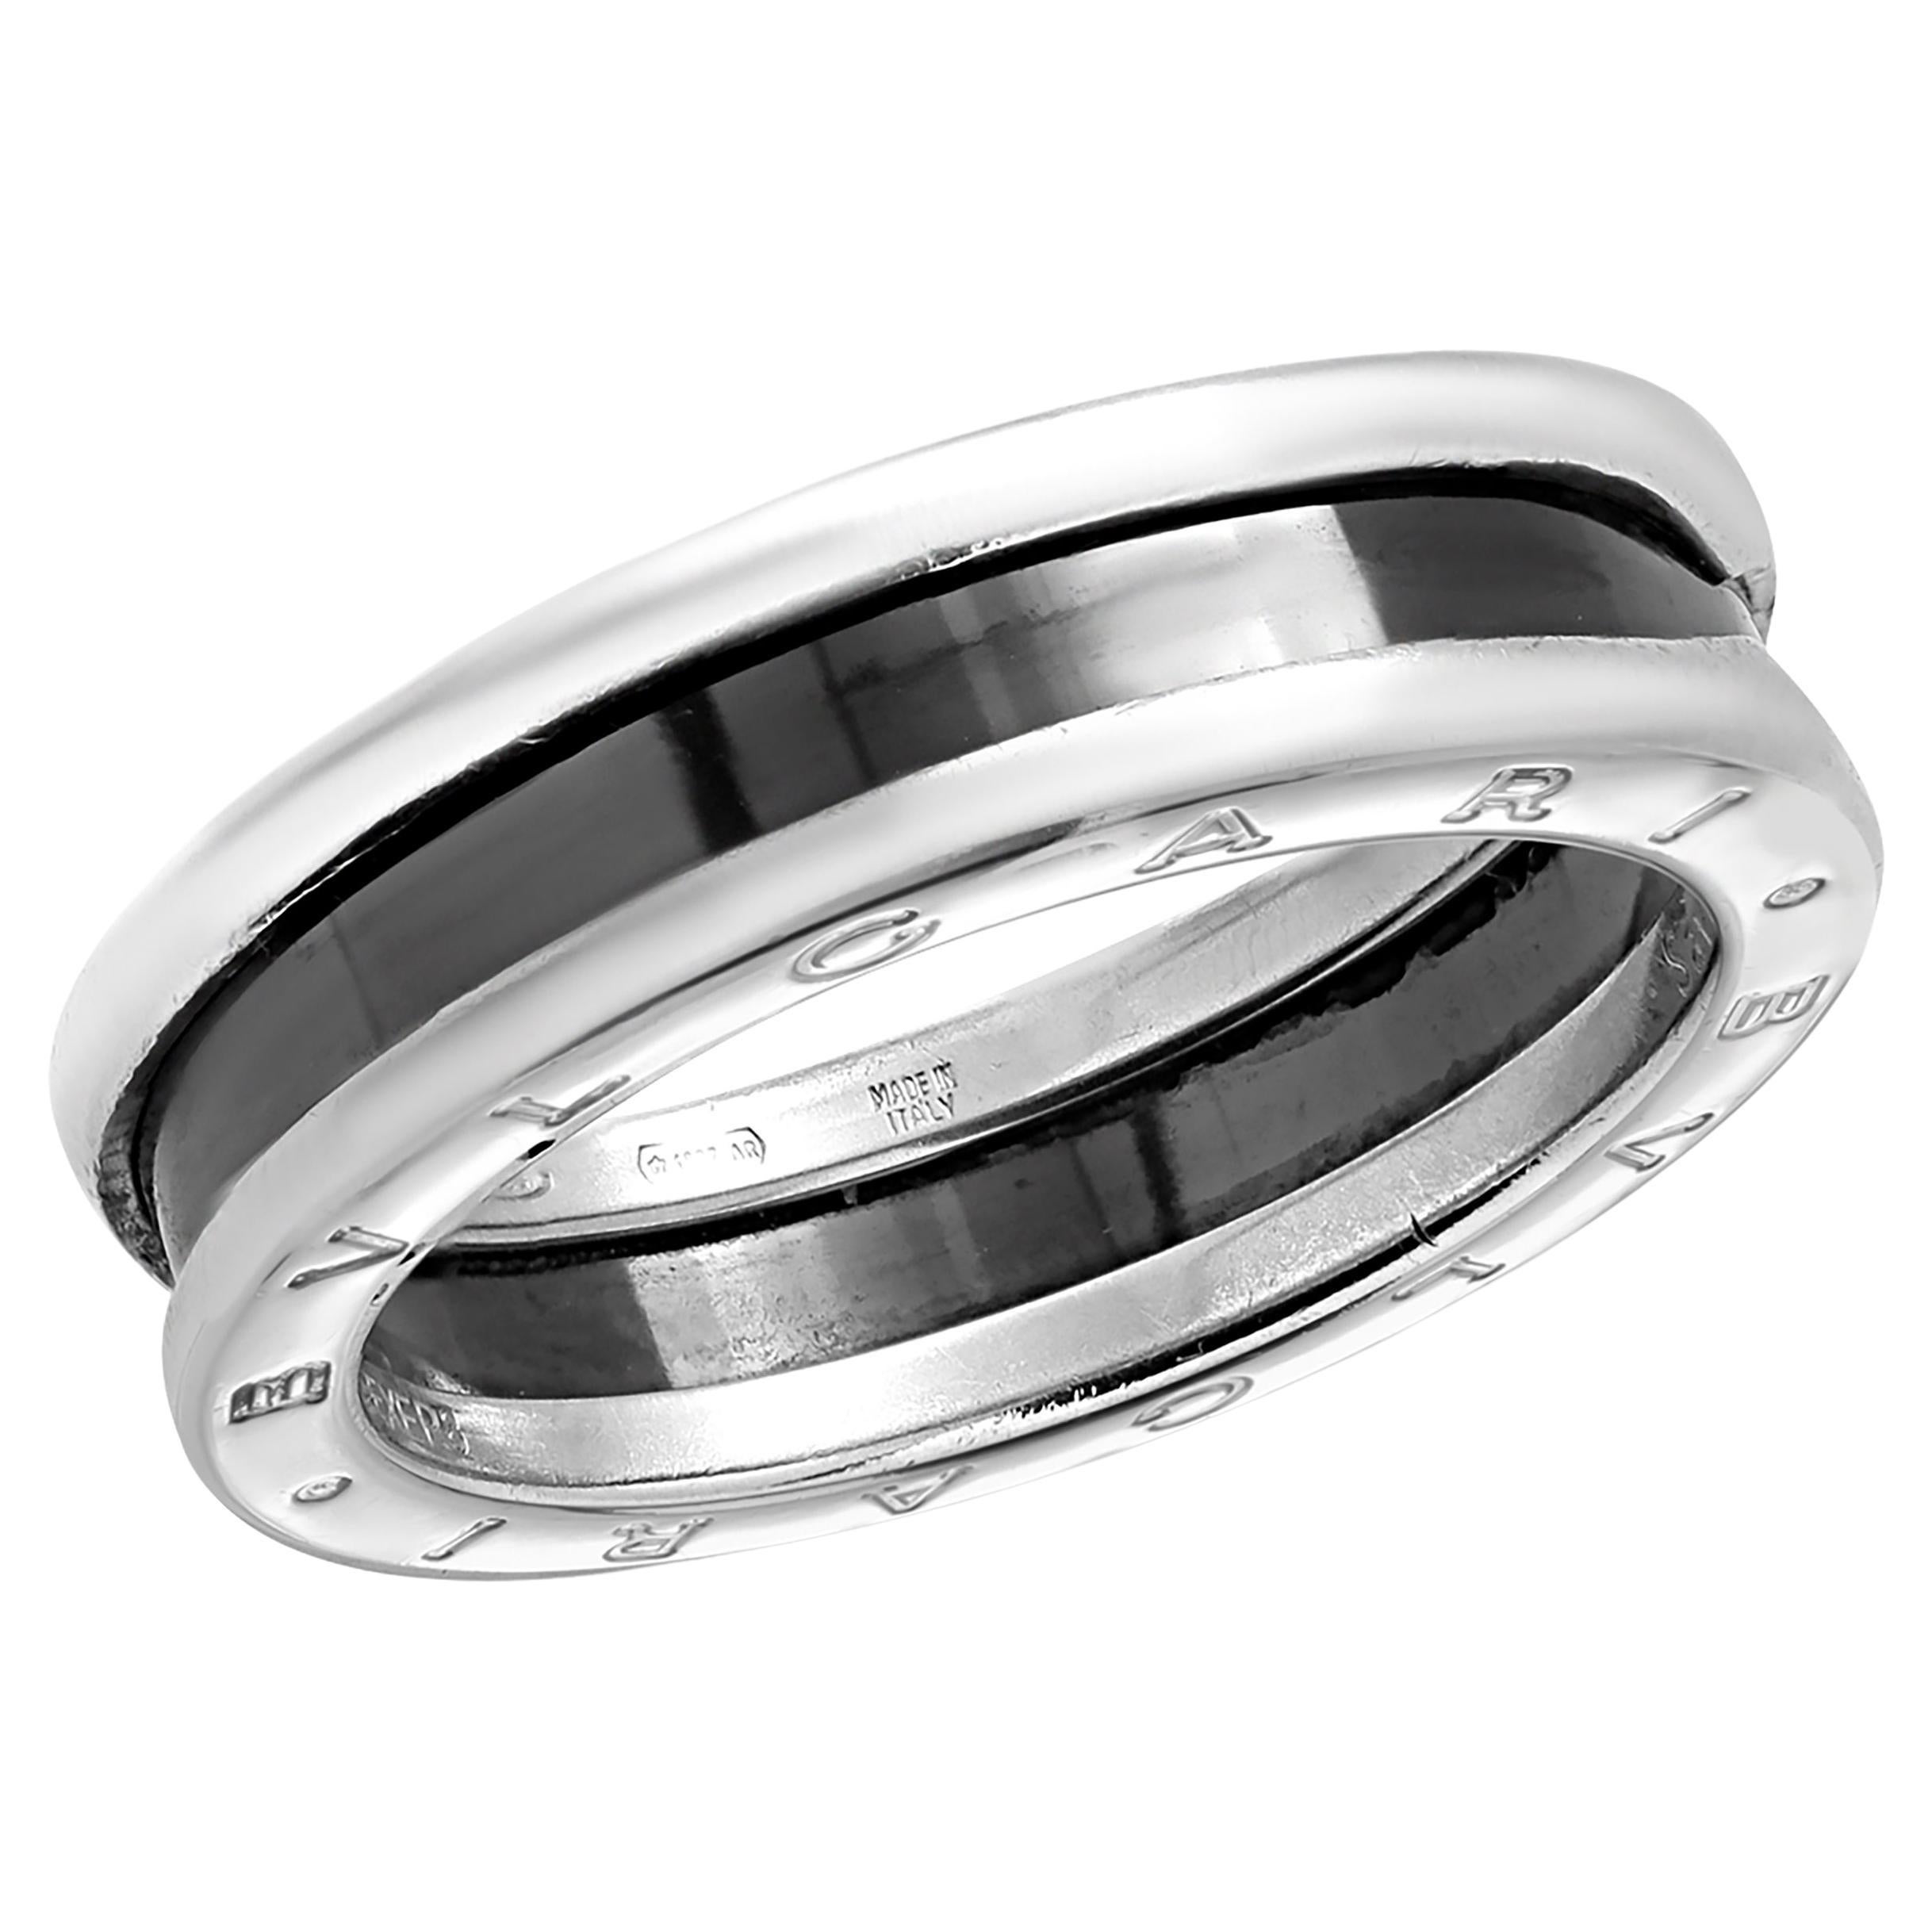 Bulgari B.Zero1 Ceramic Gold Ring | Fashion rings, Vintage style rings, Mens  wedding rings tungsten